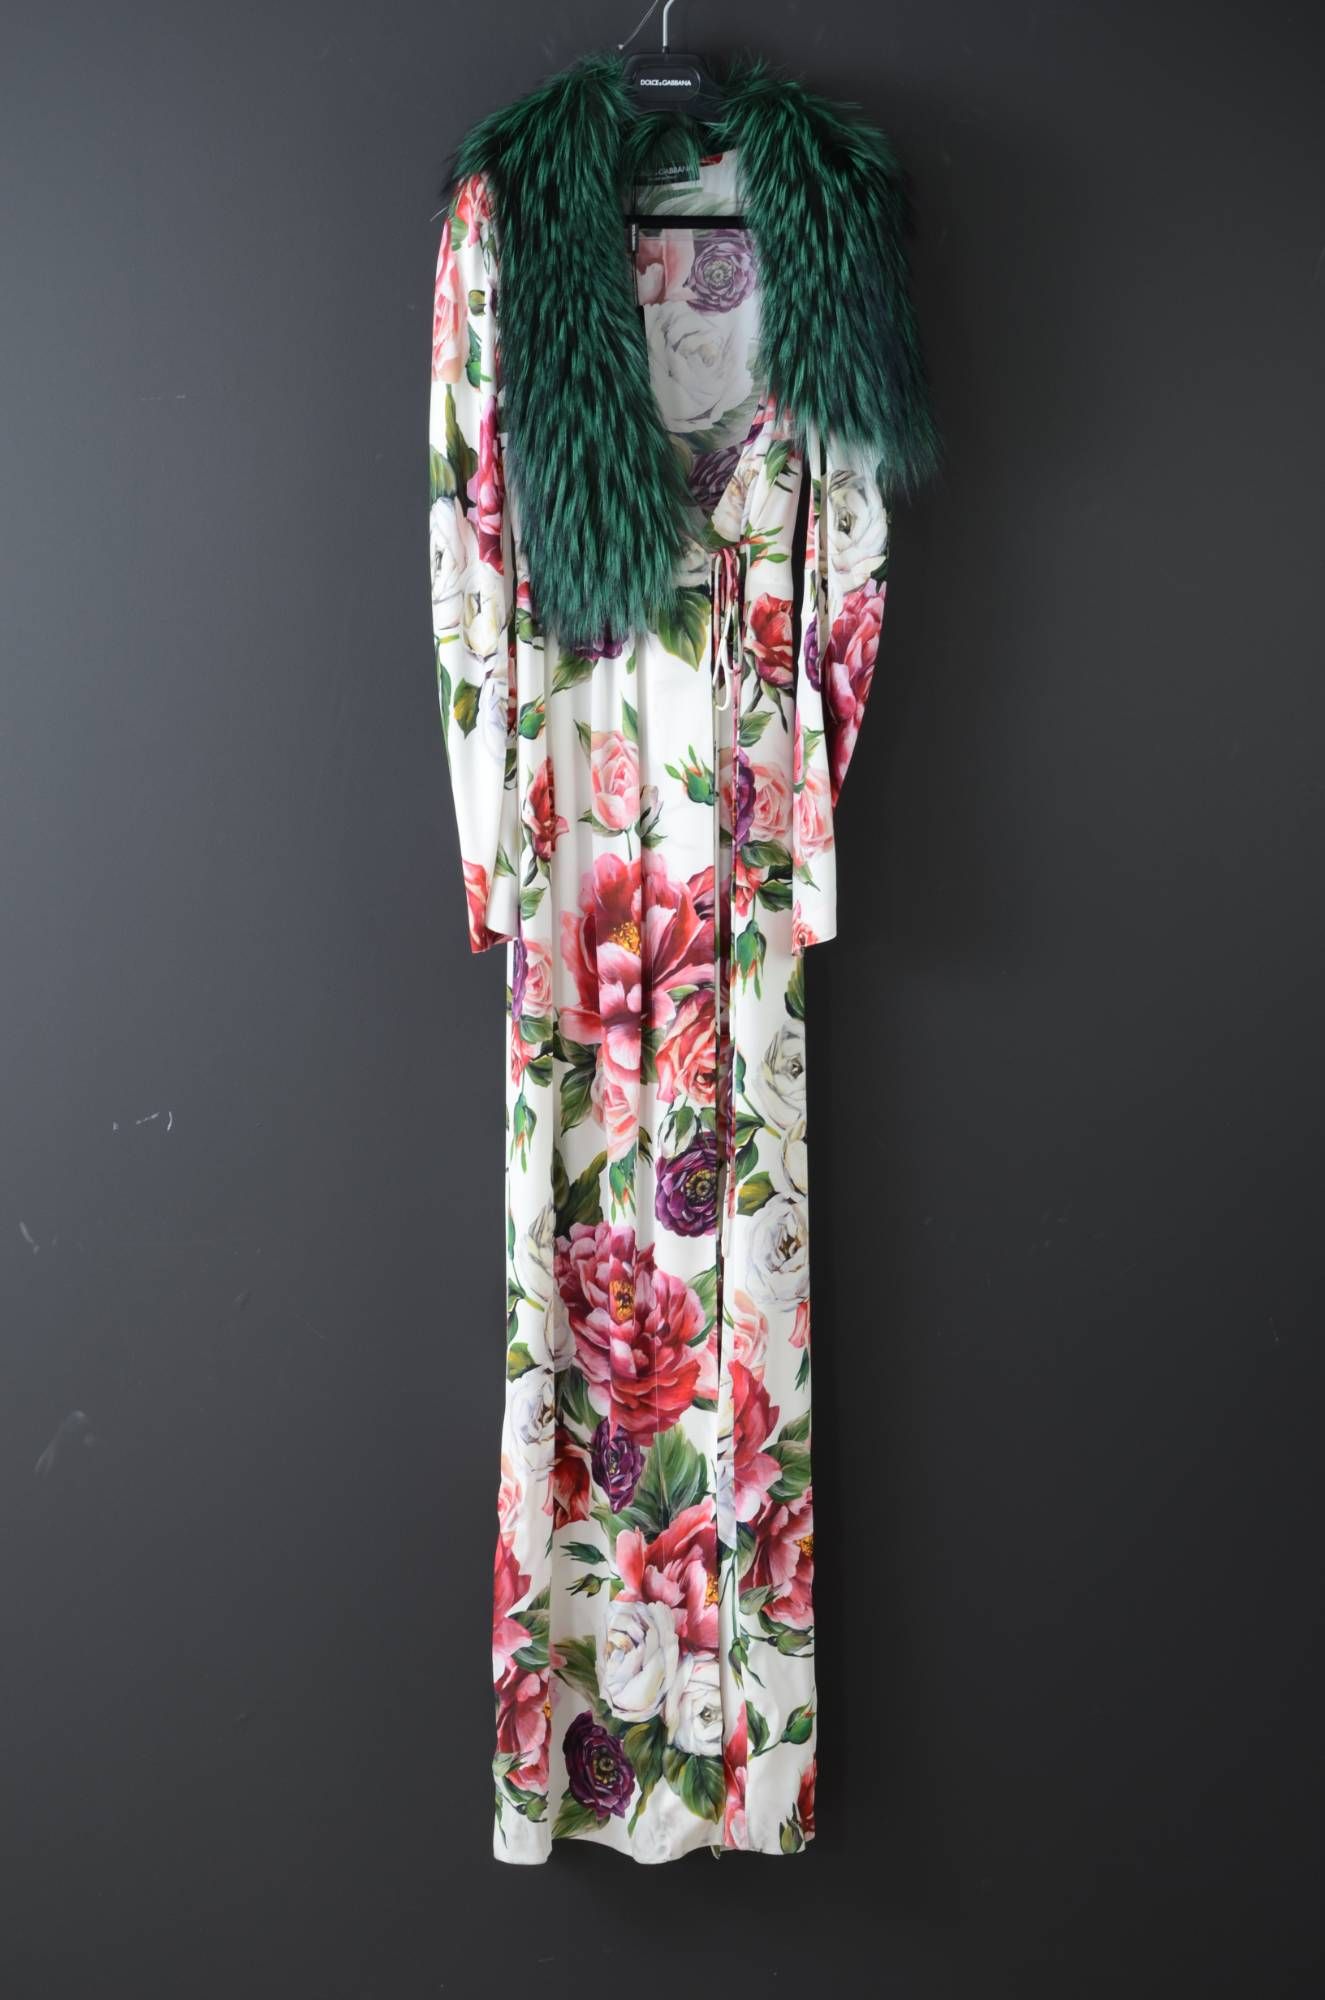 Floral Print
Long Sleeve
With Cords
F0U62T GDJ21
94% Silk, 6% Elastane